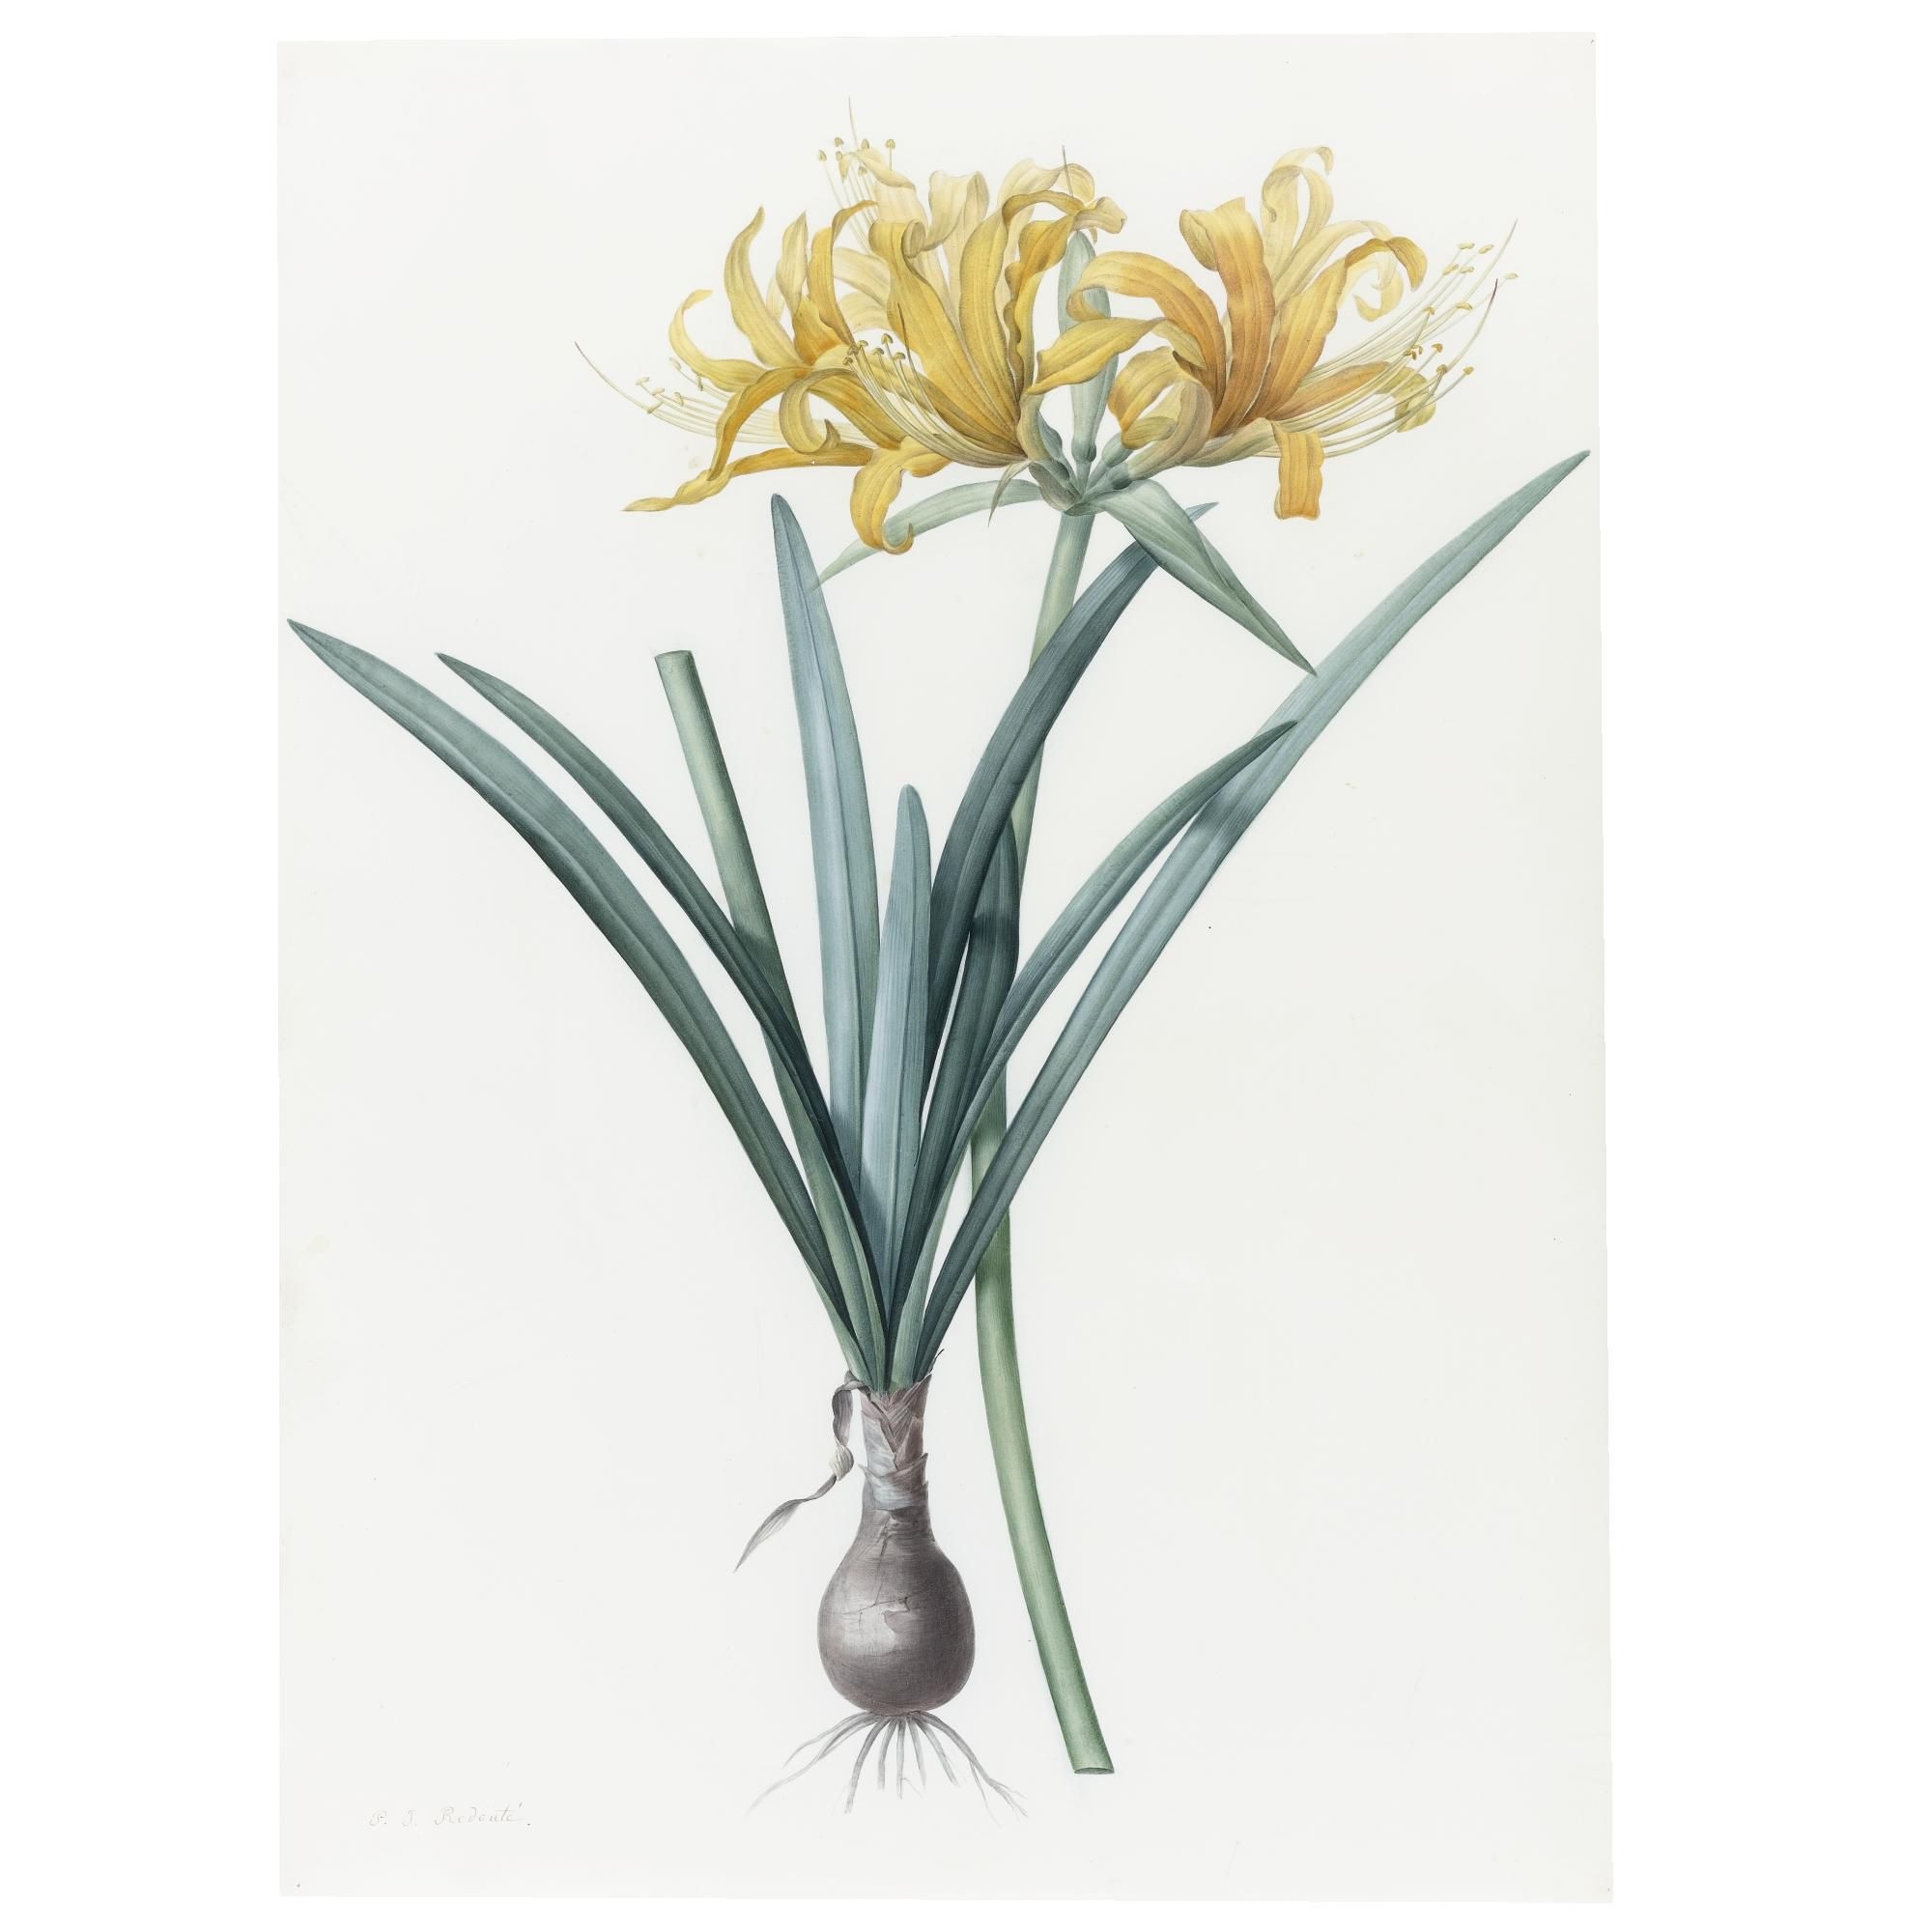 Amaryllis aurea / Amaryllis dorée by Pierre-Joseph Redoute